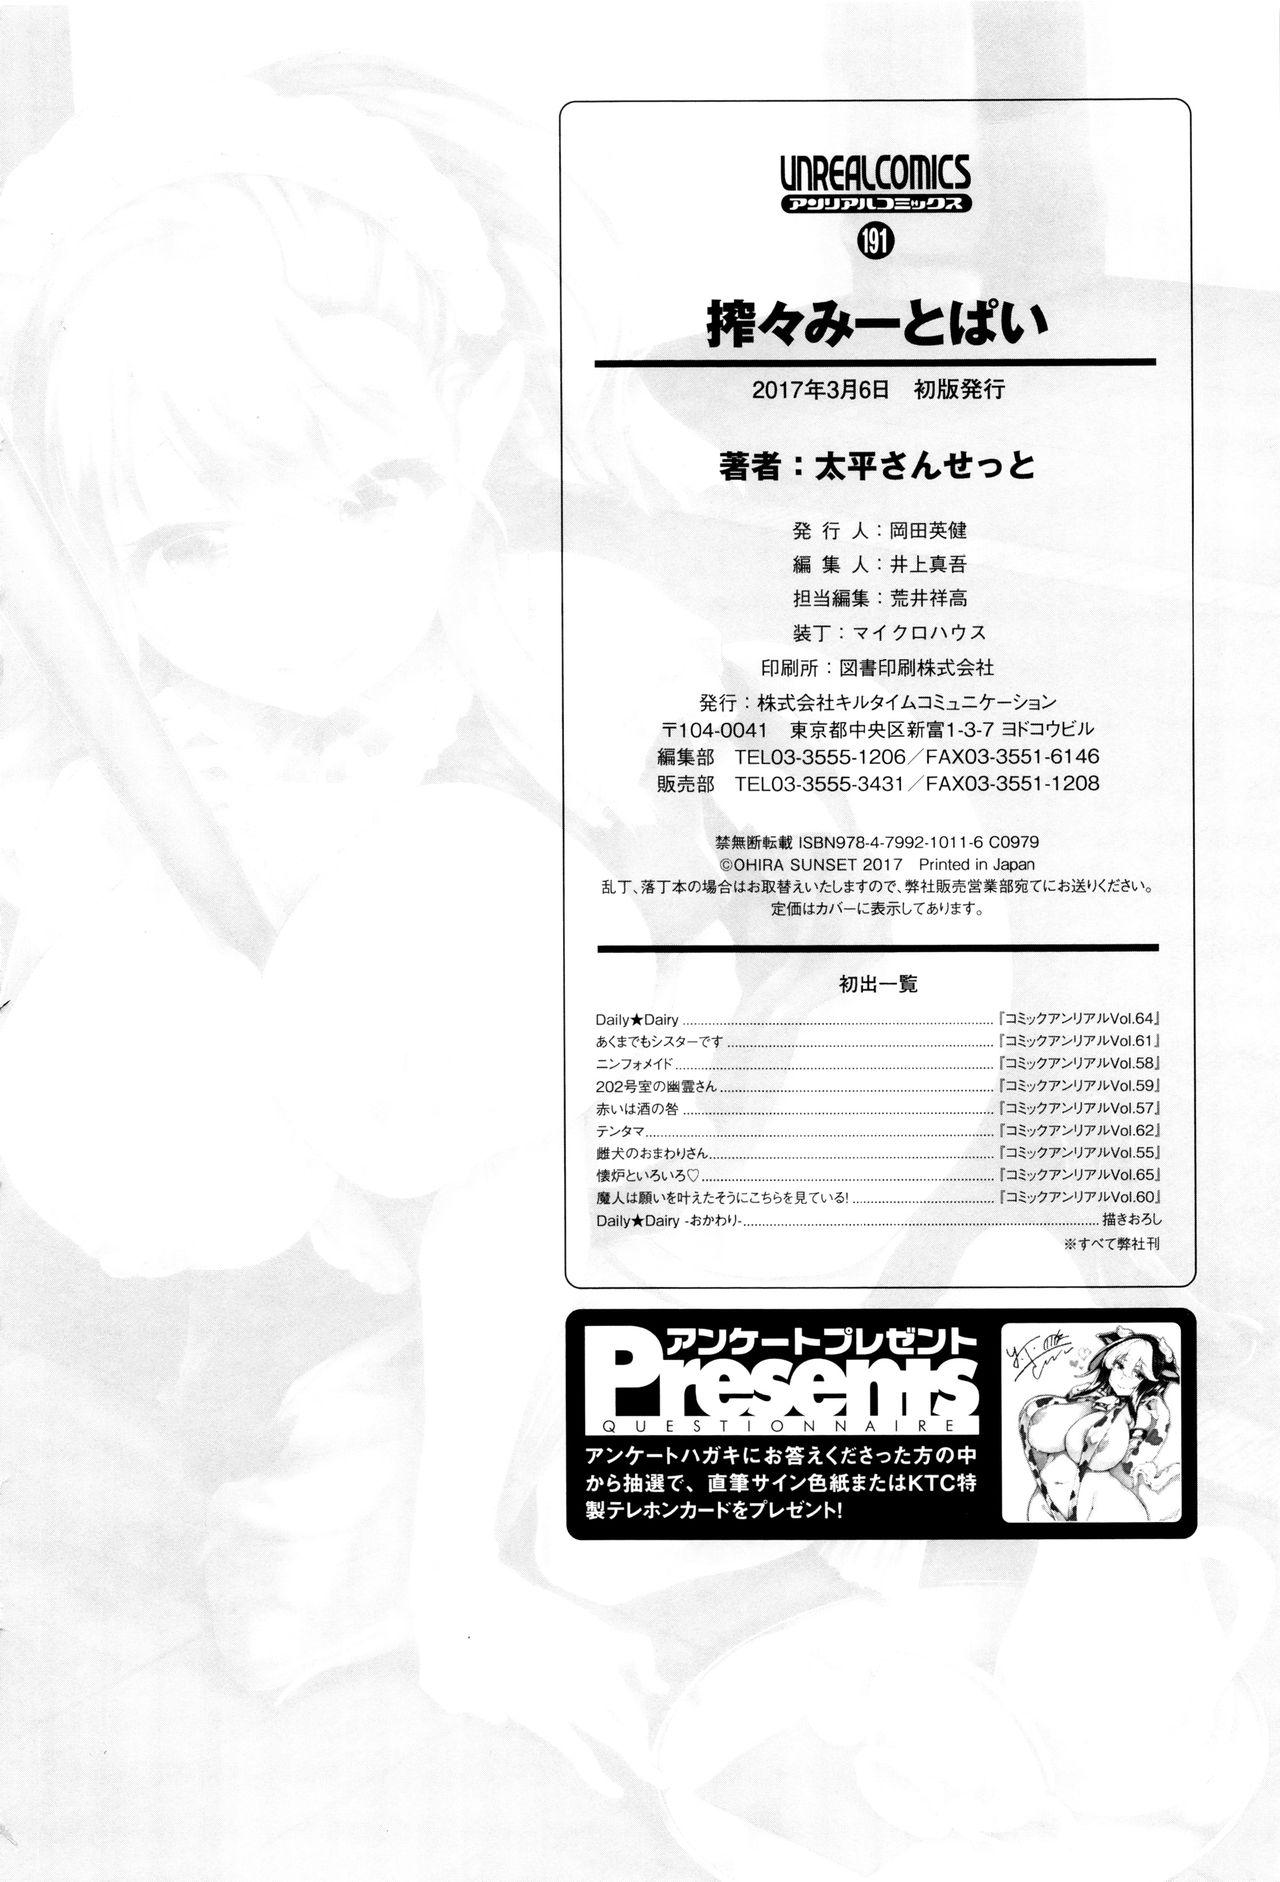 Sakusaku Meat Pie + Melonbooks leaflet 178